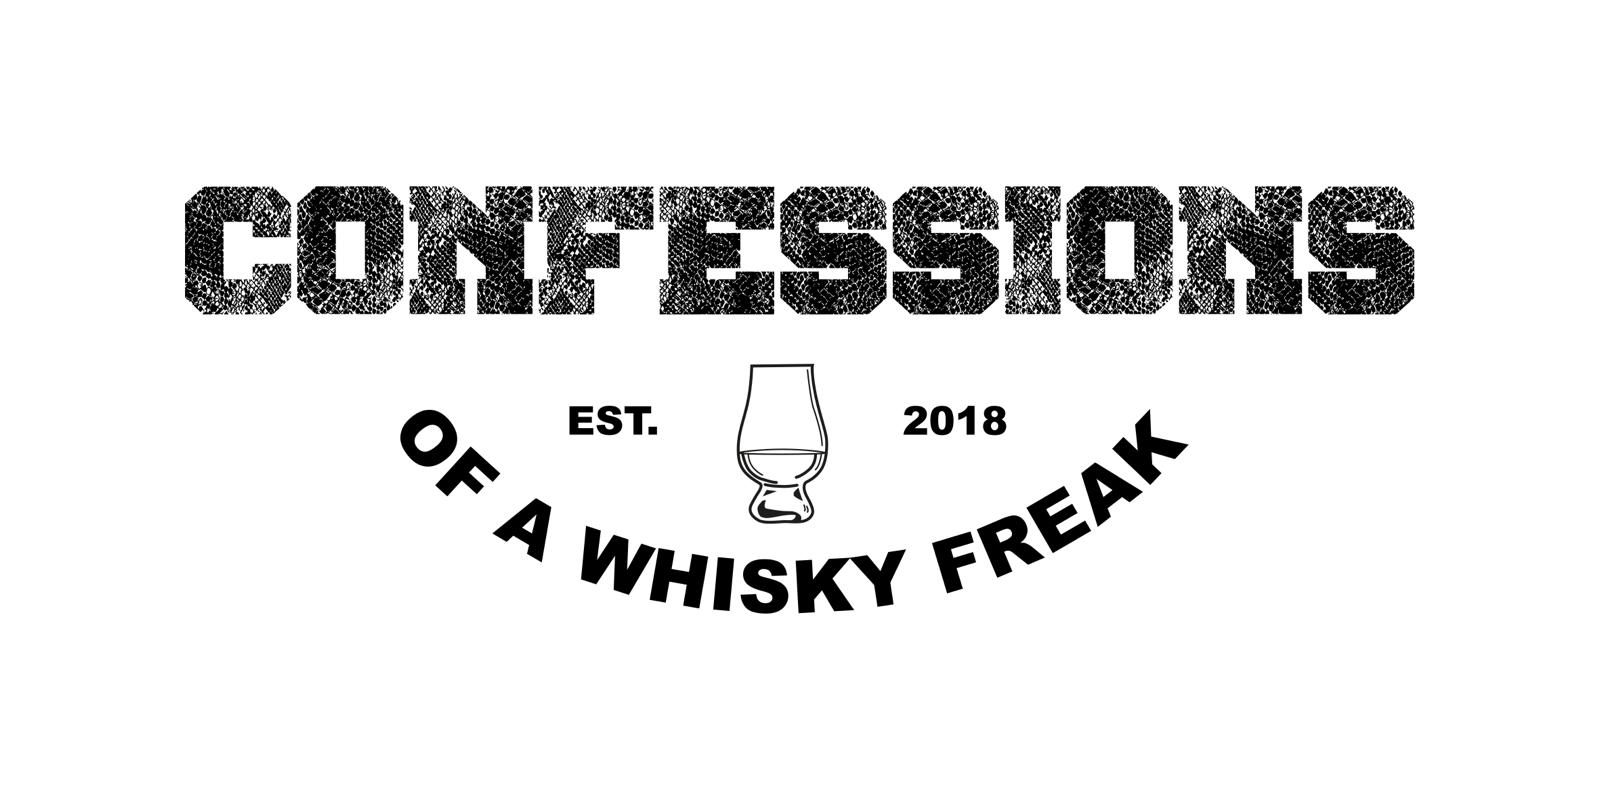 confessions of a whisky freak logo bij fsom